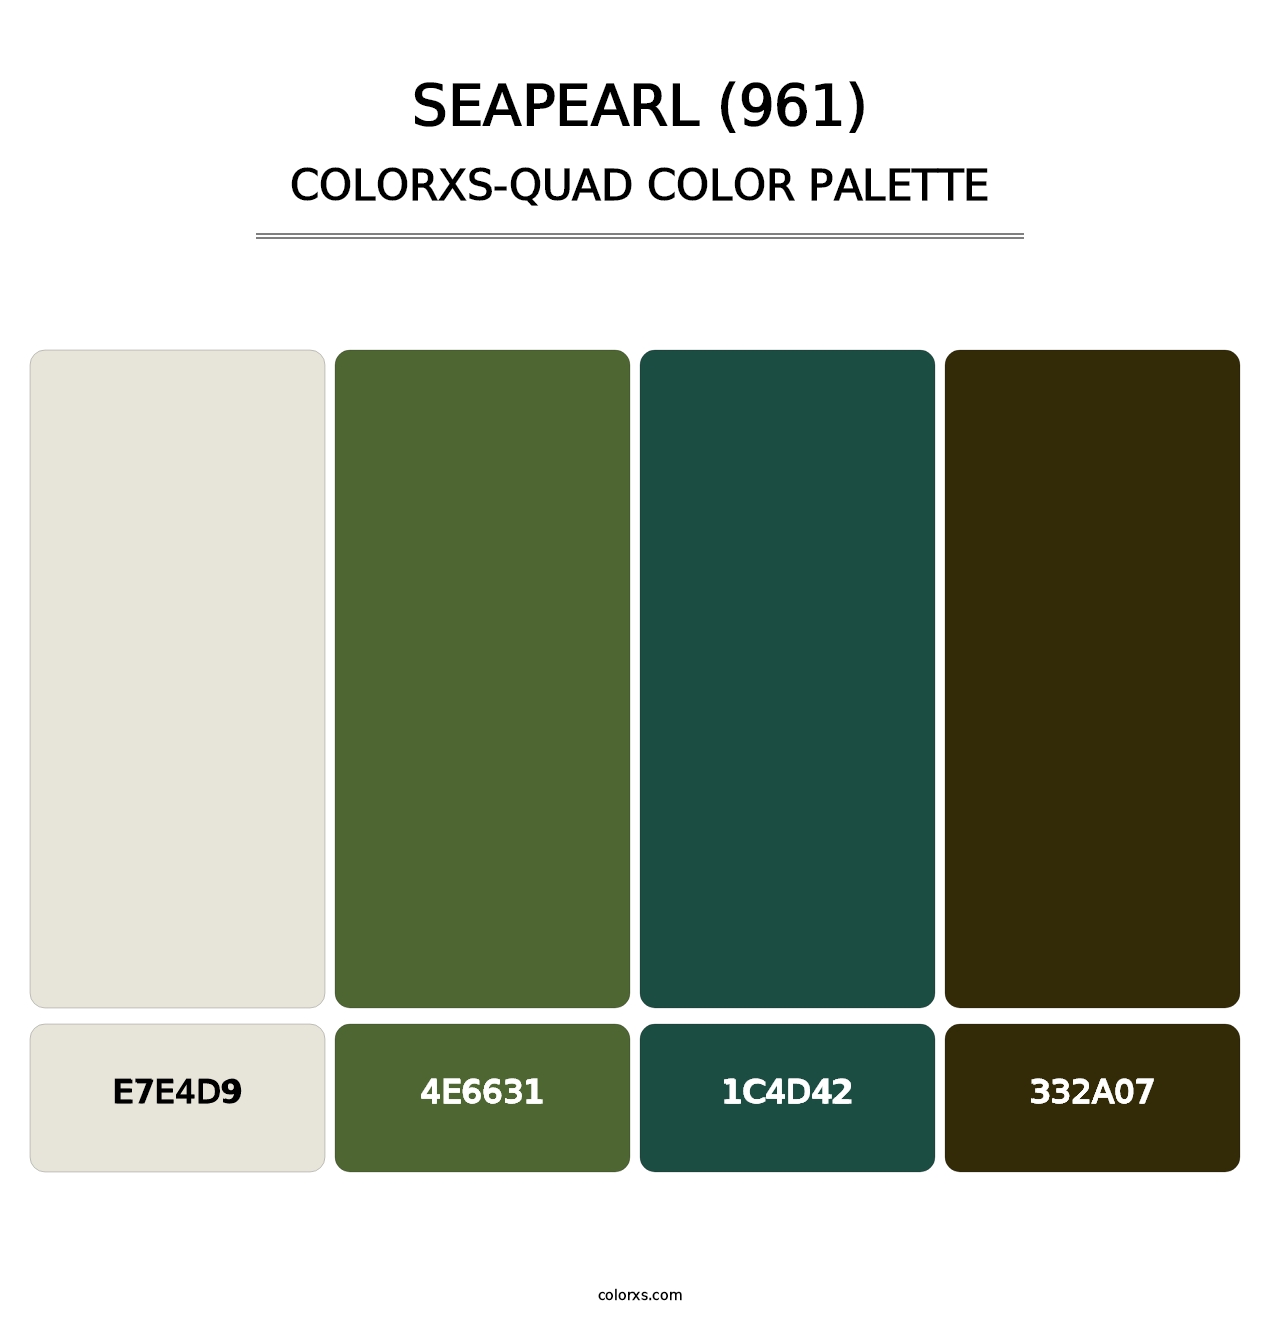 Seapearl (961) - Colorxs Quad Palette